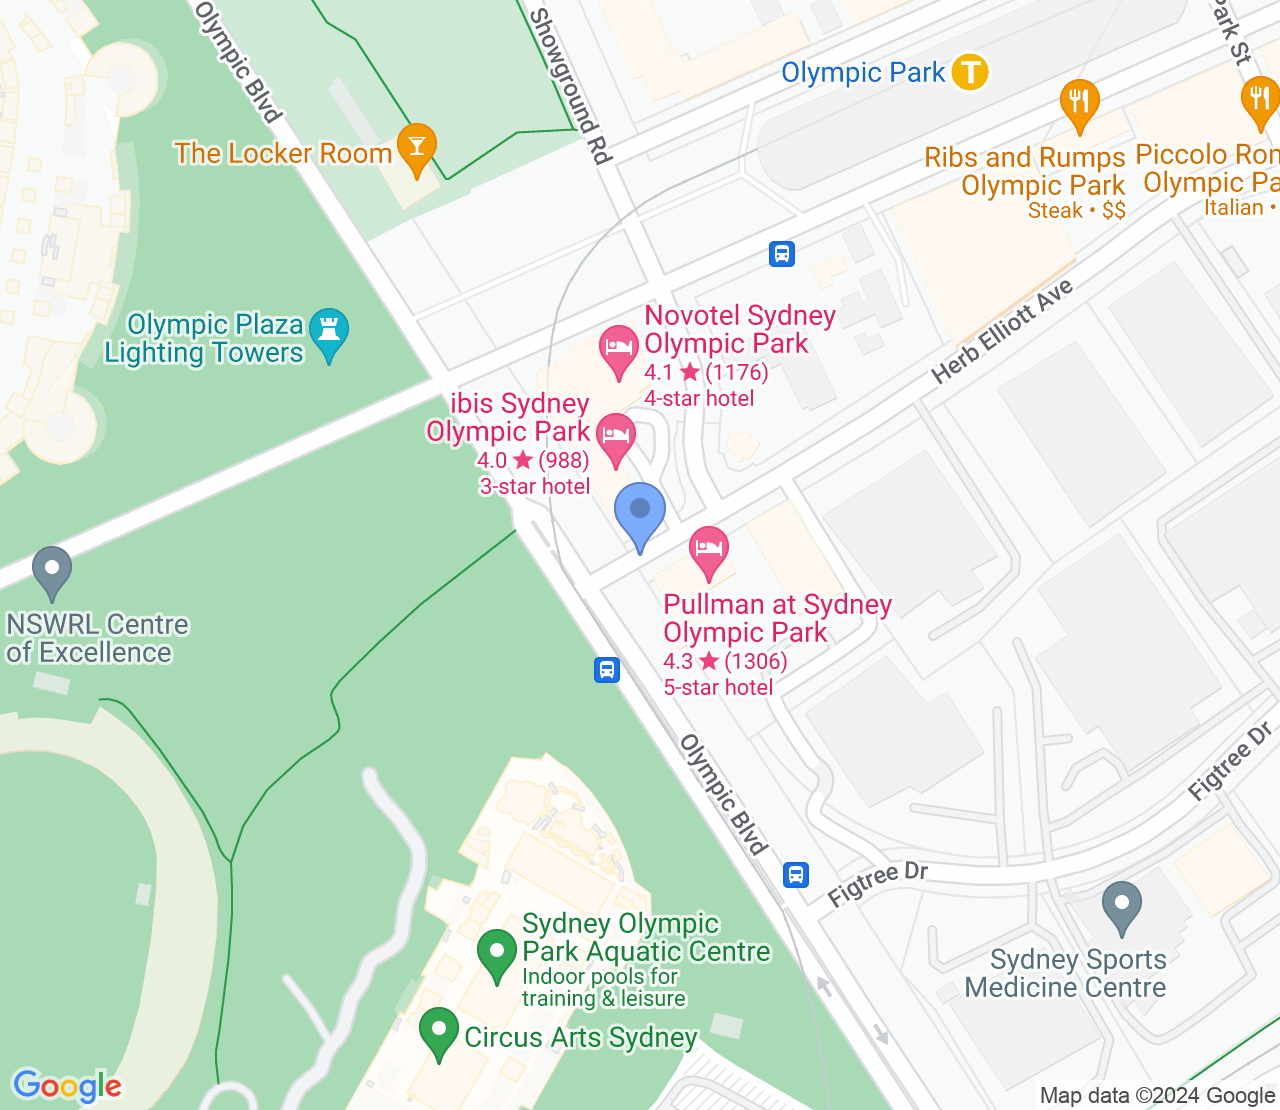 Google Maps image of Sydney Olympic Park Aquatic Centre